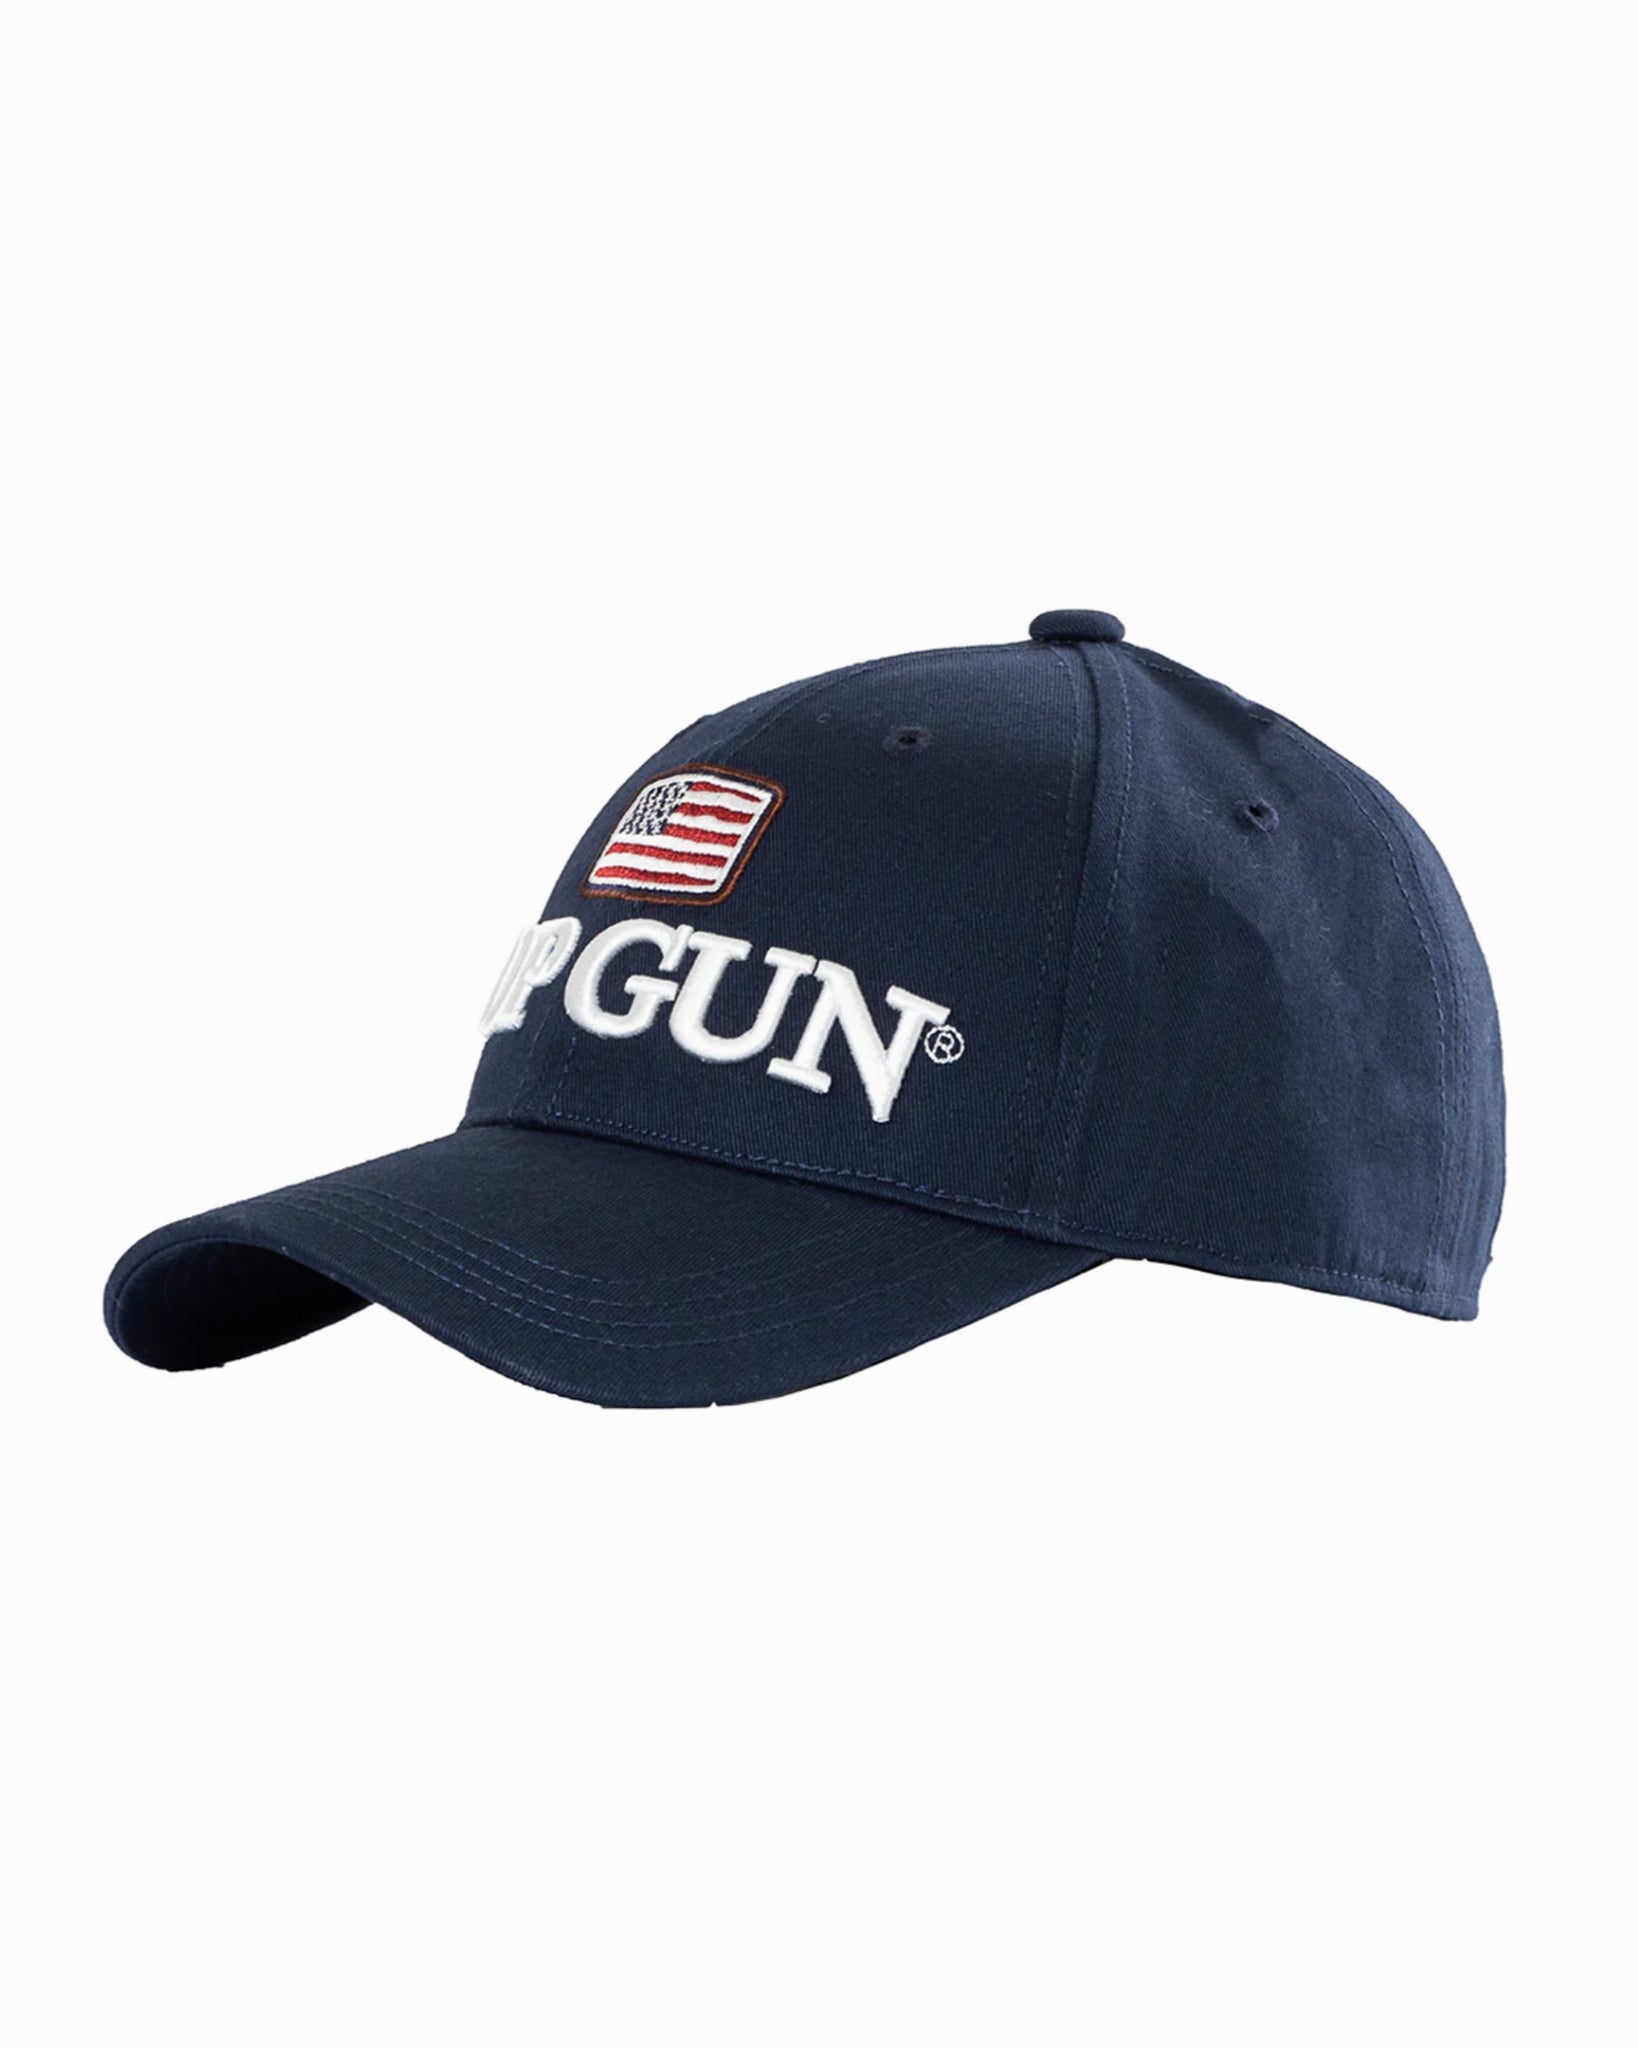 Store | Beanie, Gun Top Cap, – Trucker | Caps and Store Gun: Maverick More Official Top Hat,